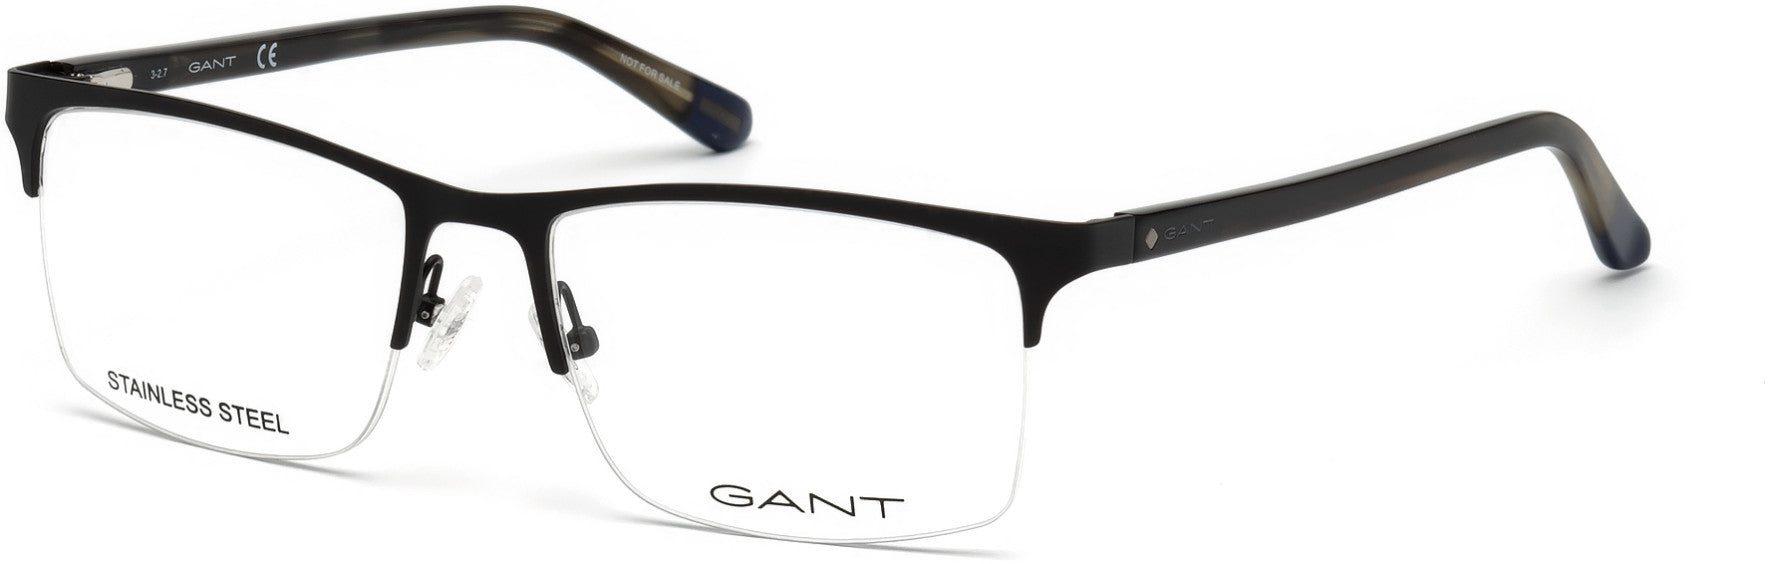 Gant GA3169 Rectangular Eyeglasses 002-002 - Matte Black